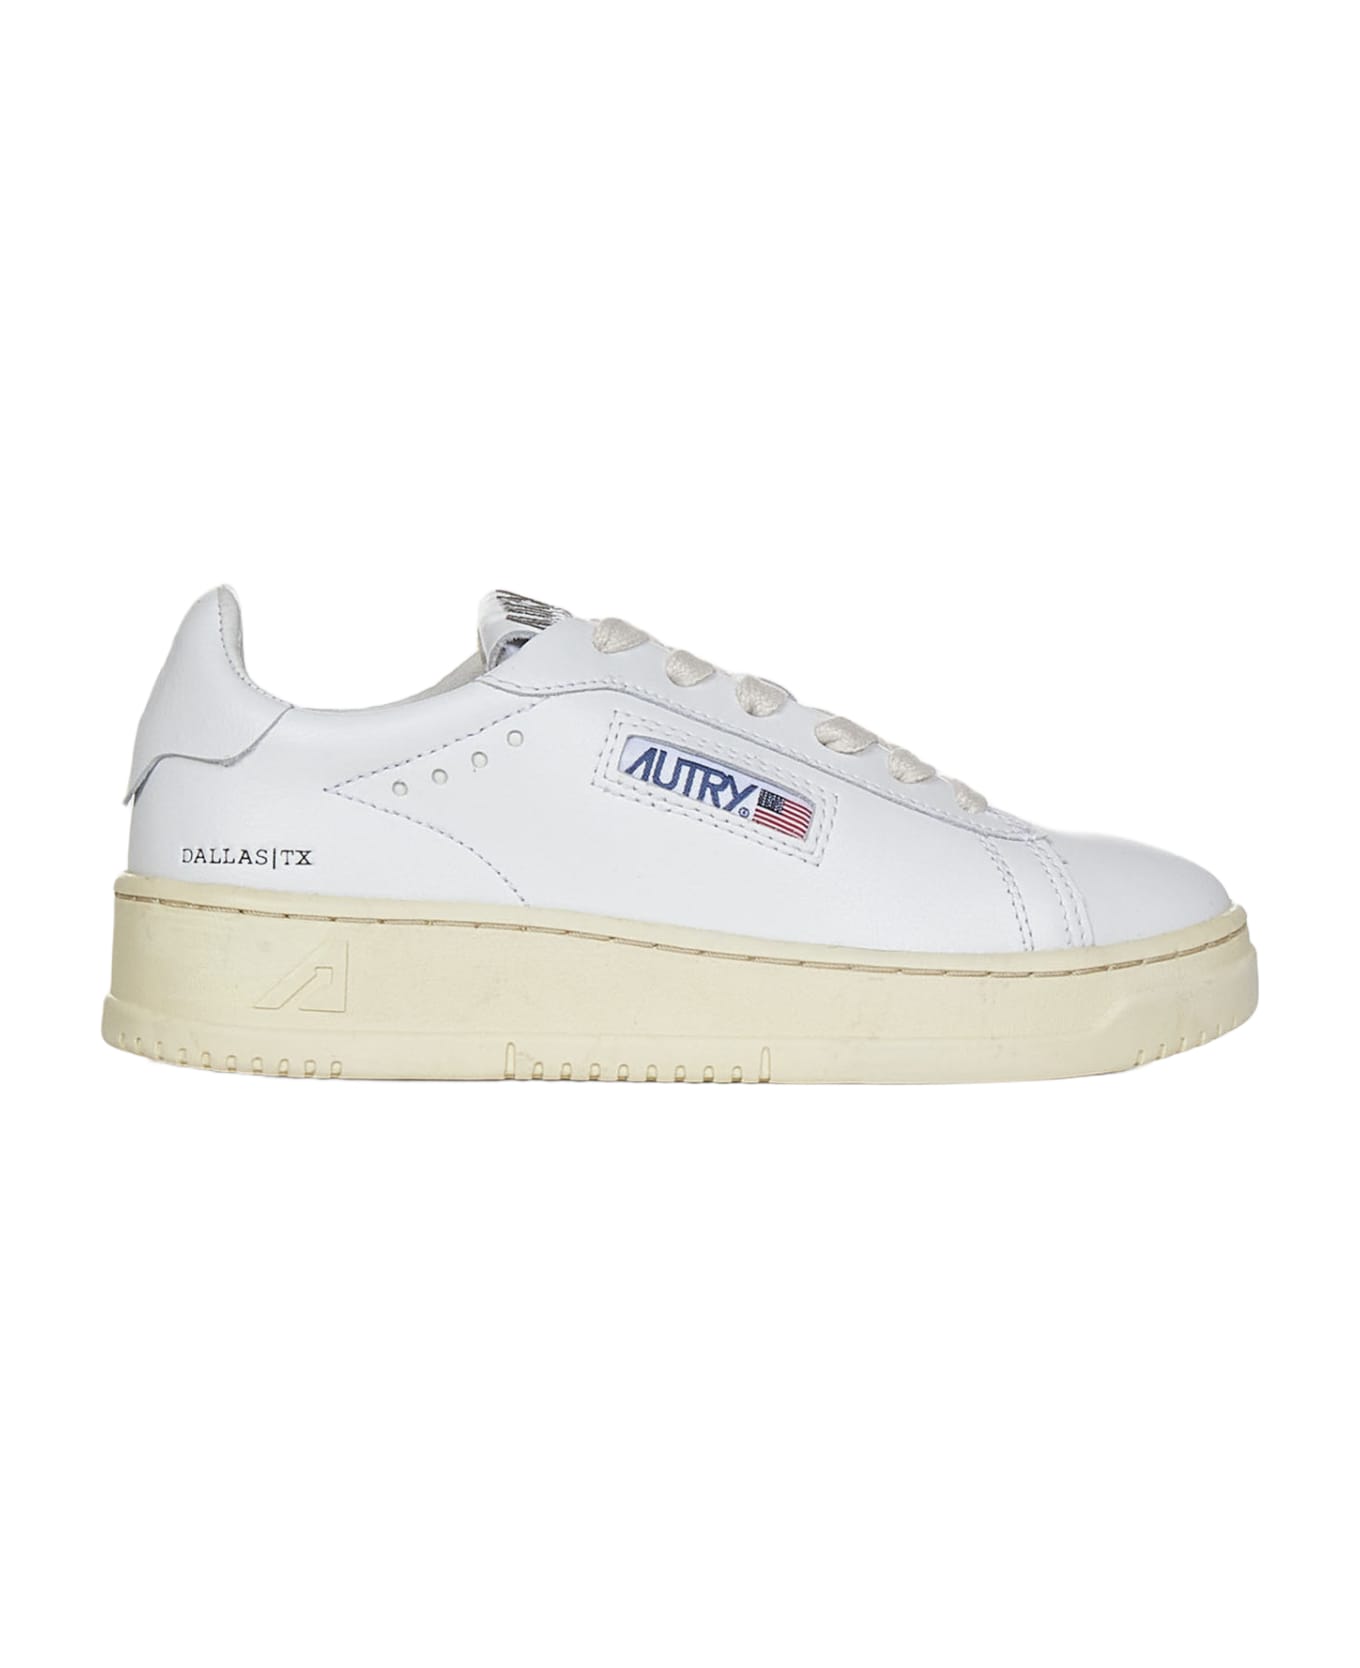 Autry Kids Dallas Low Sneakers - White